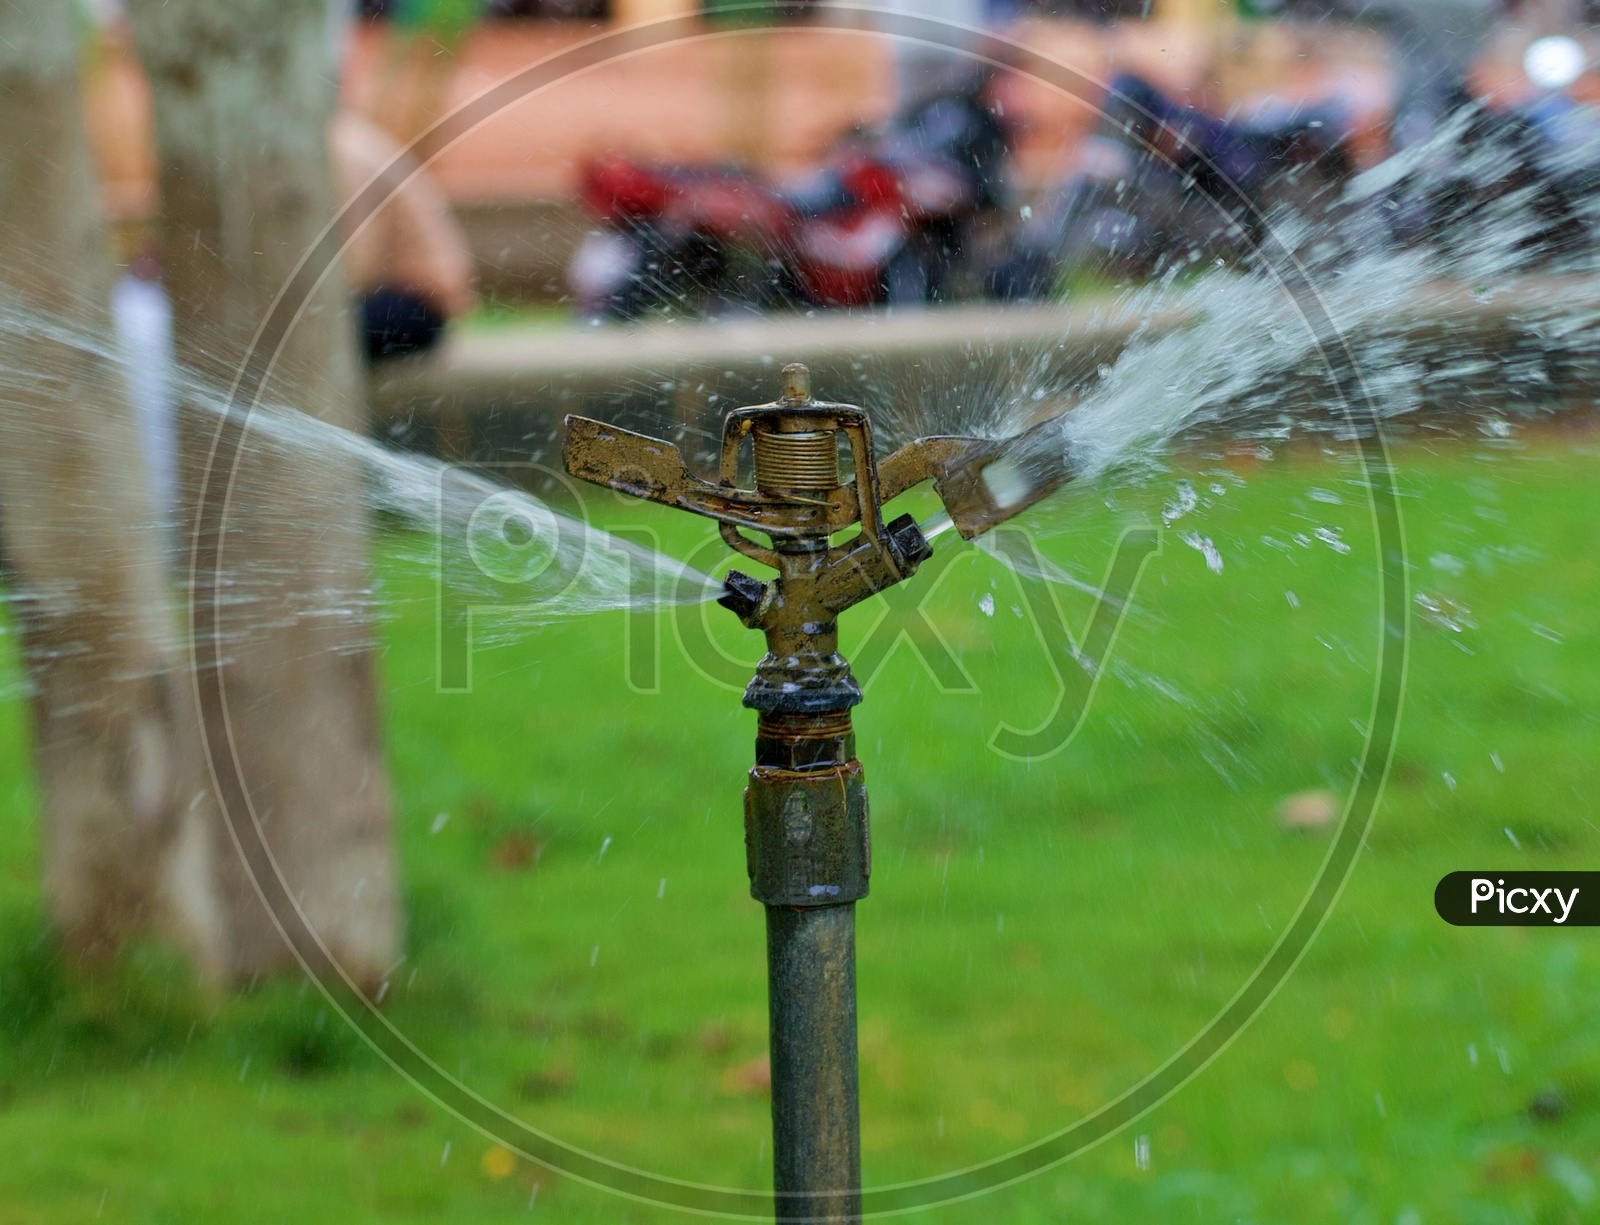 A water sprinkler.